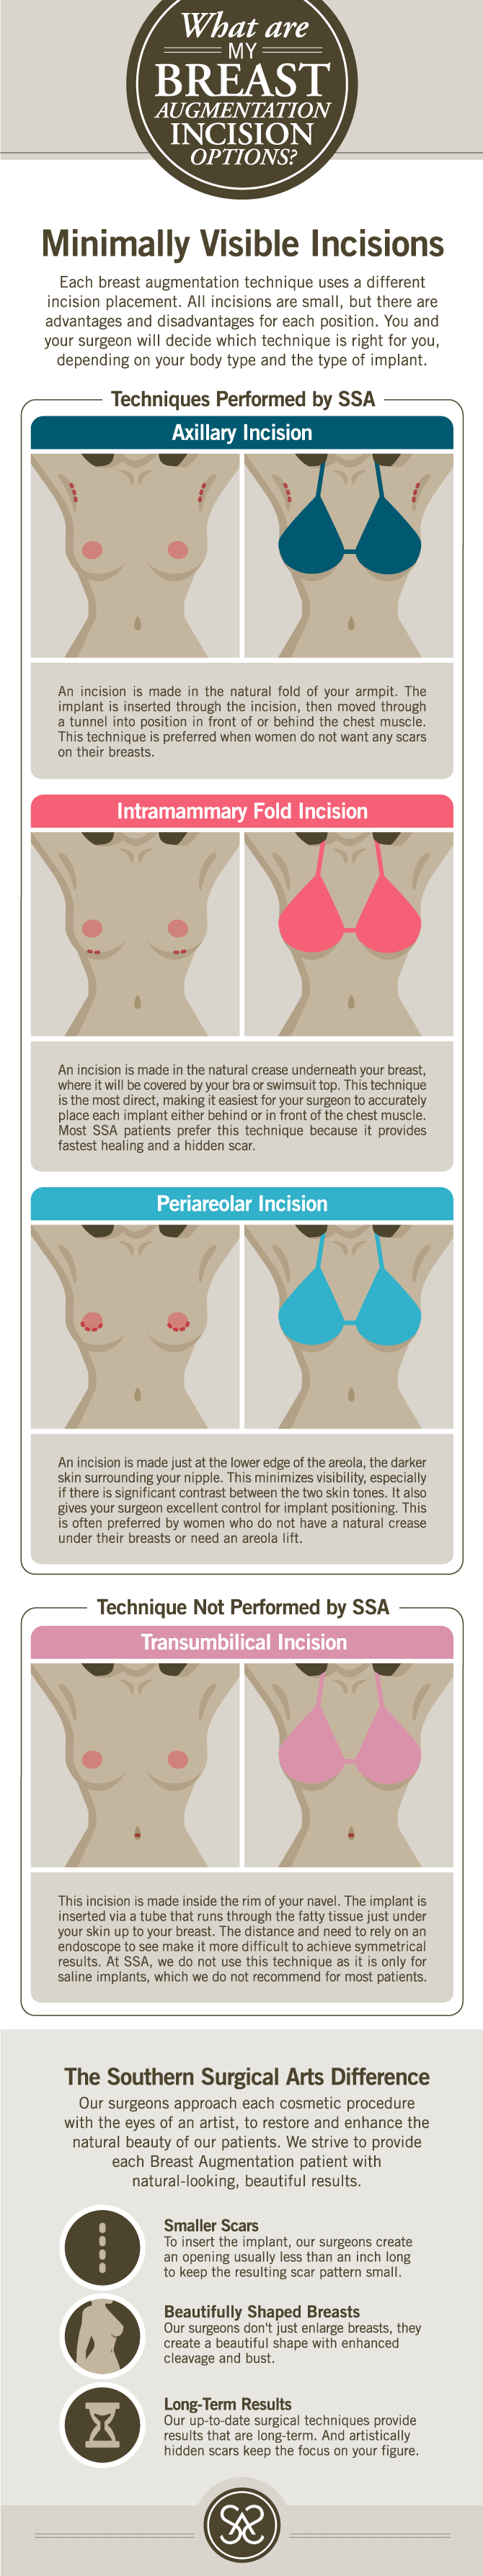 Breast lift vs breast augmentation - how to decide?